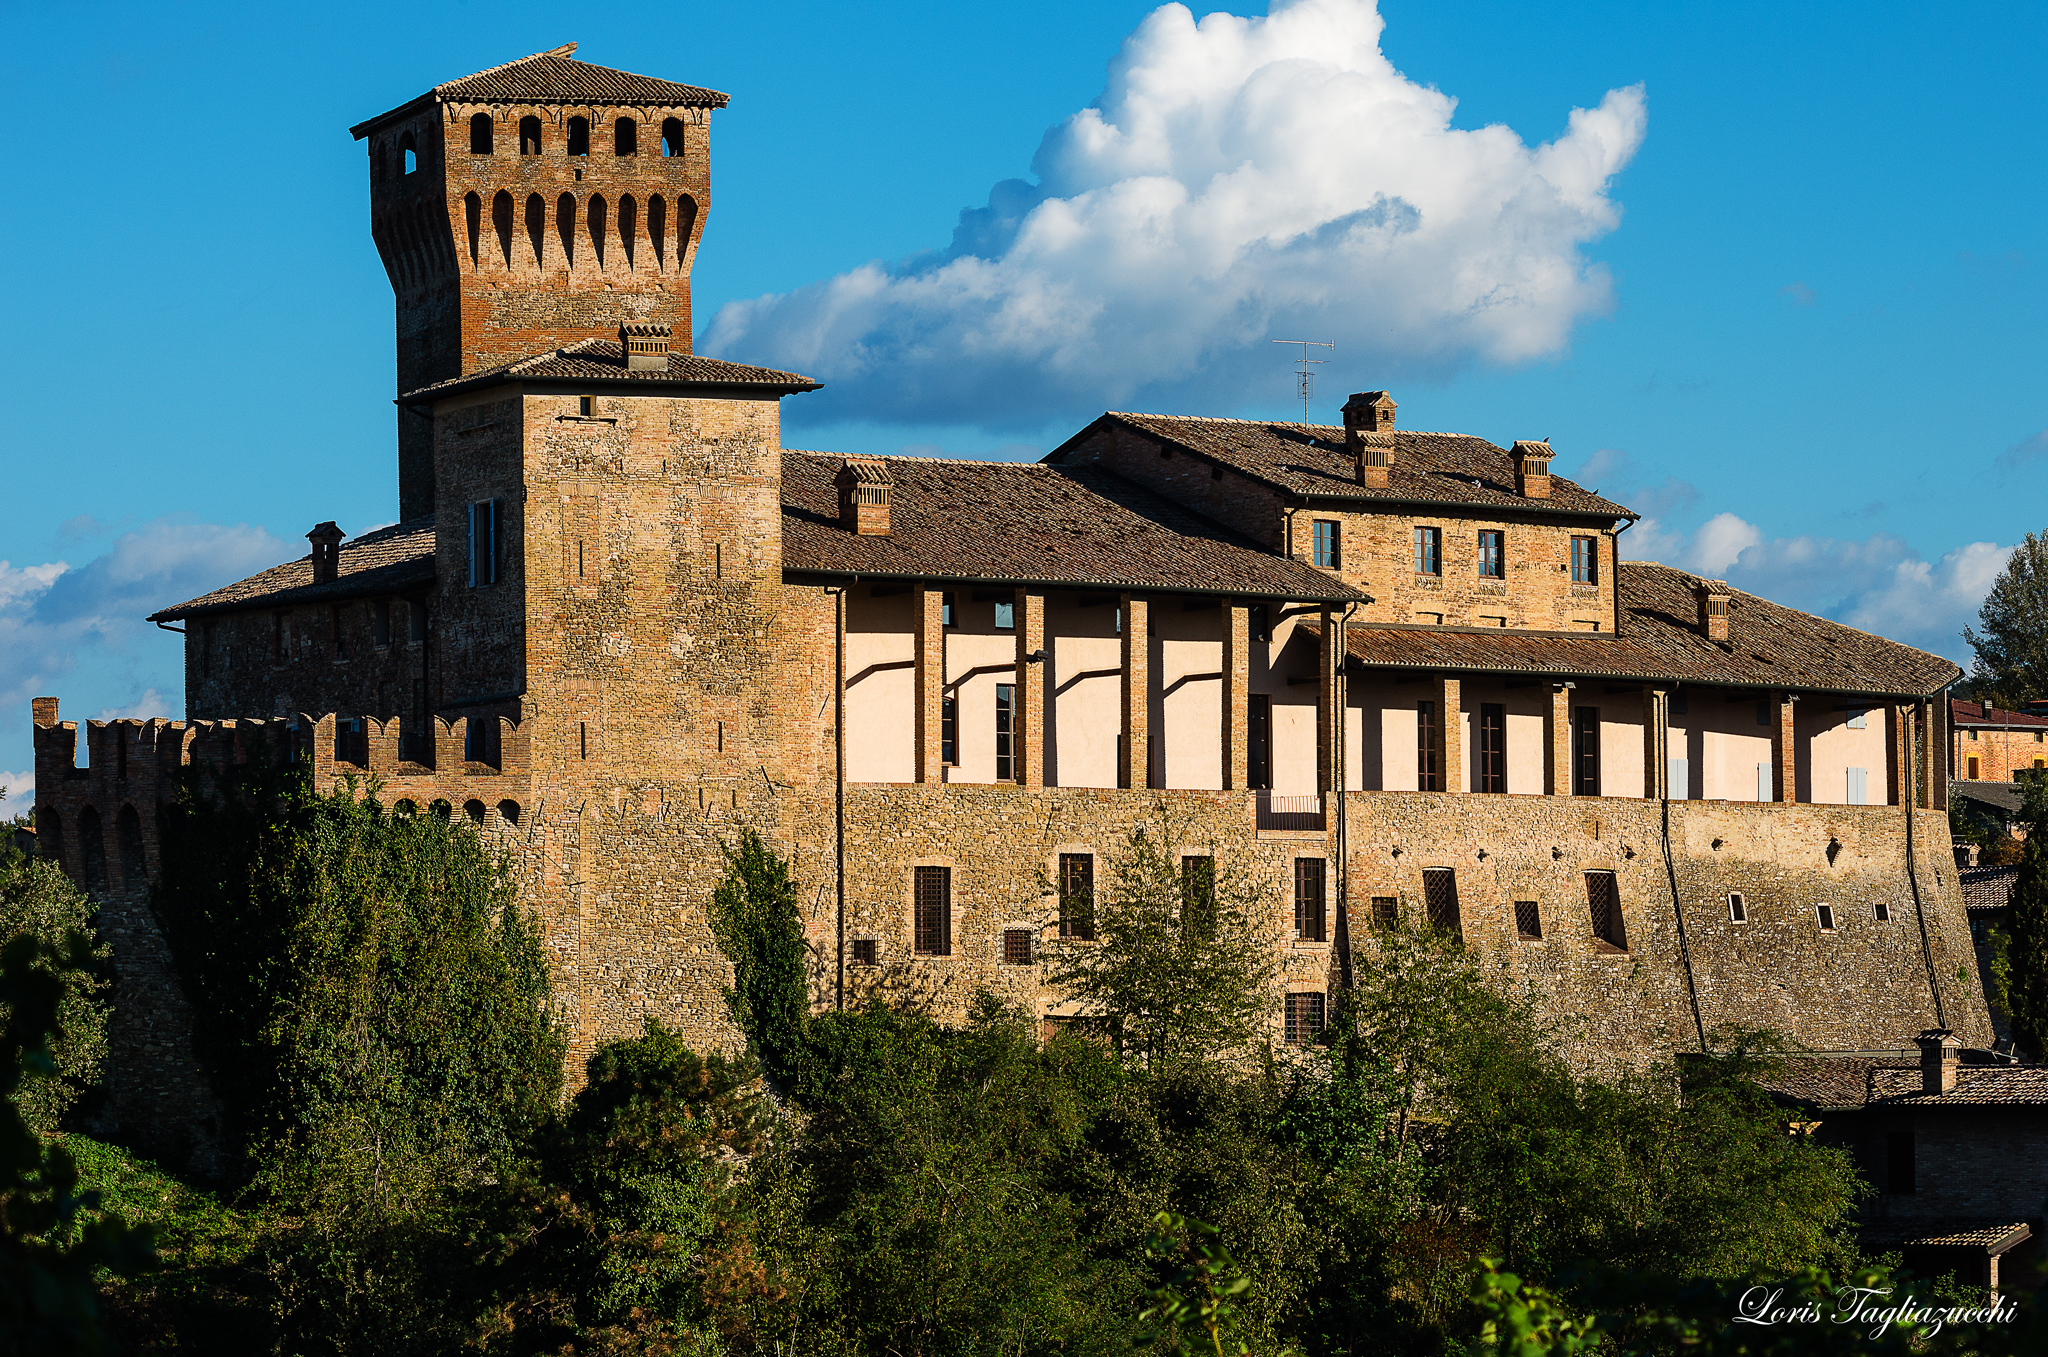 foto: https://upload.wikimedia.org/wikipedia/commons/a/aa/Castello_di_Levizzano_Rangone.JPG